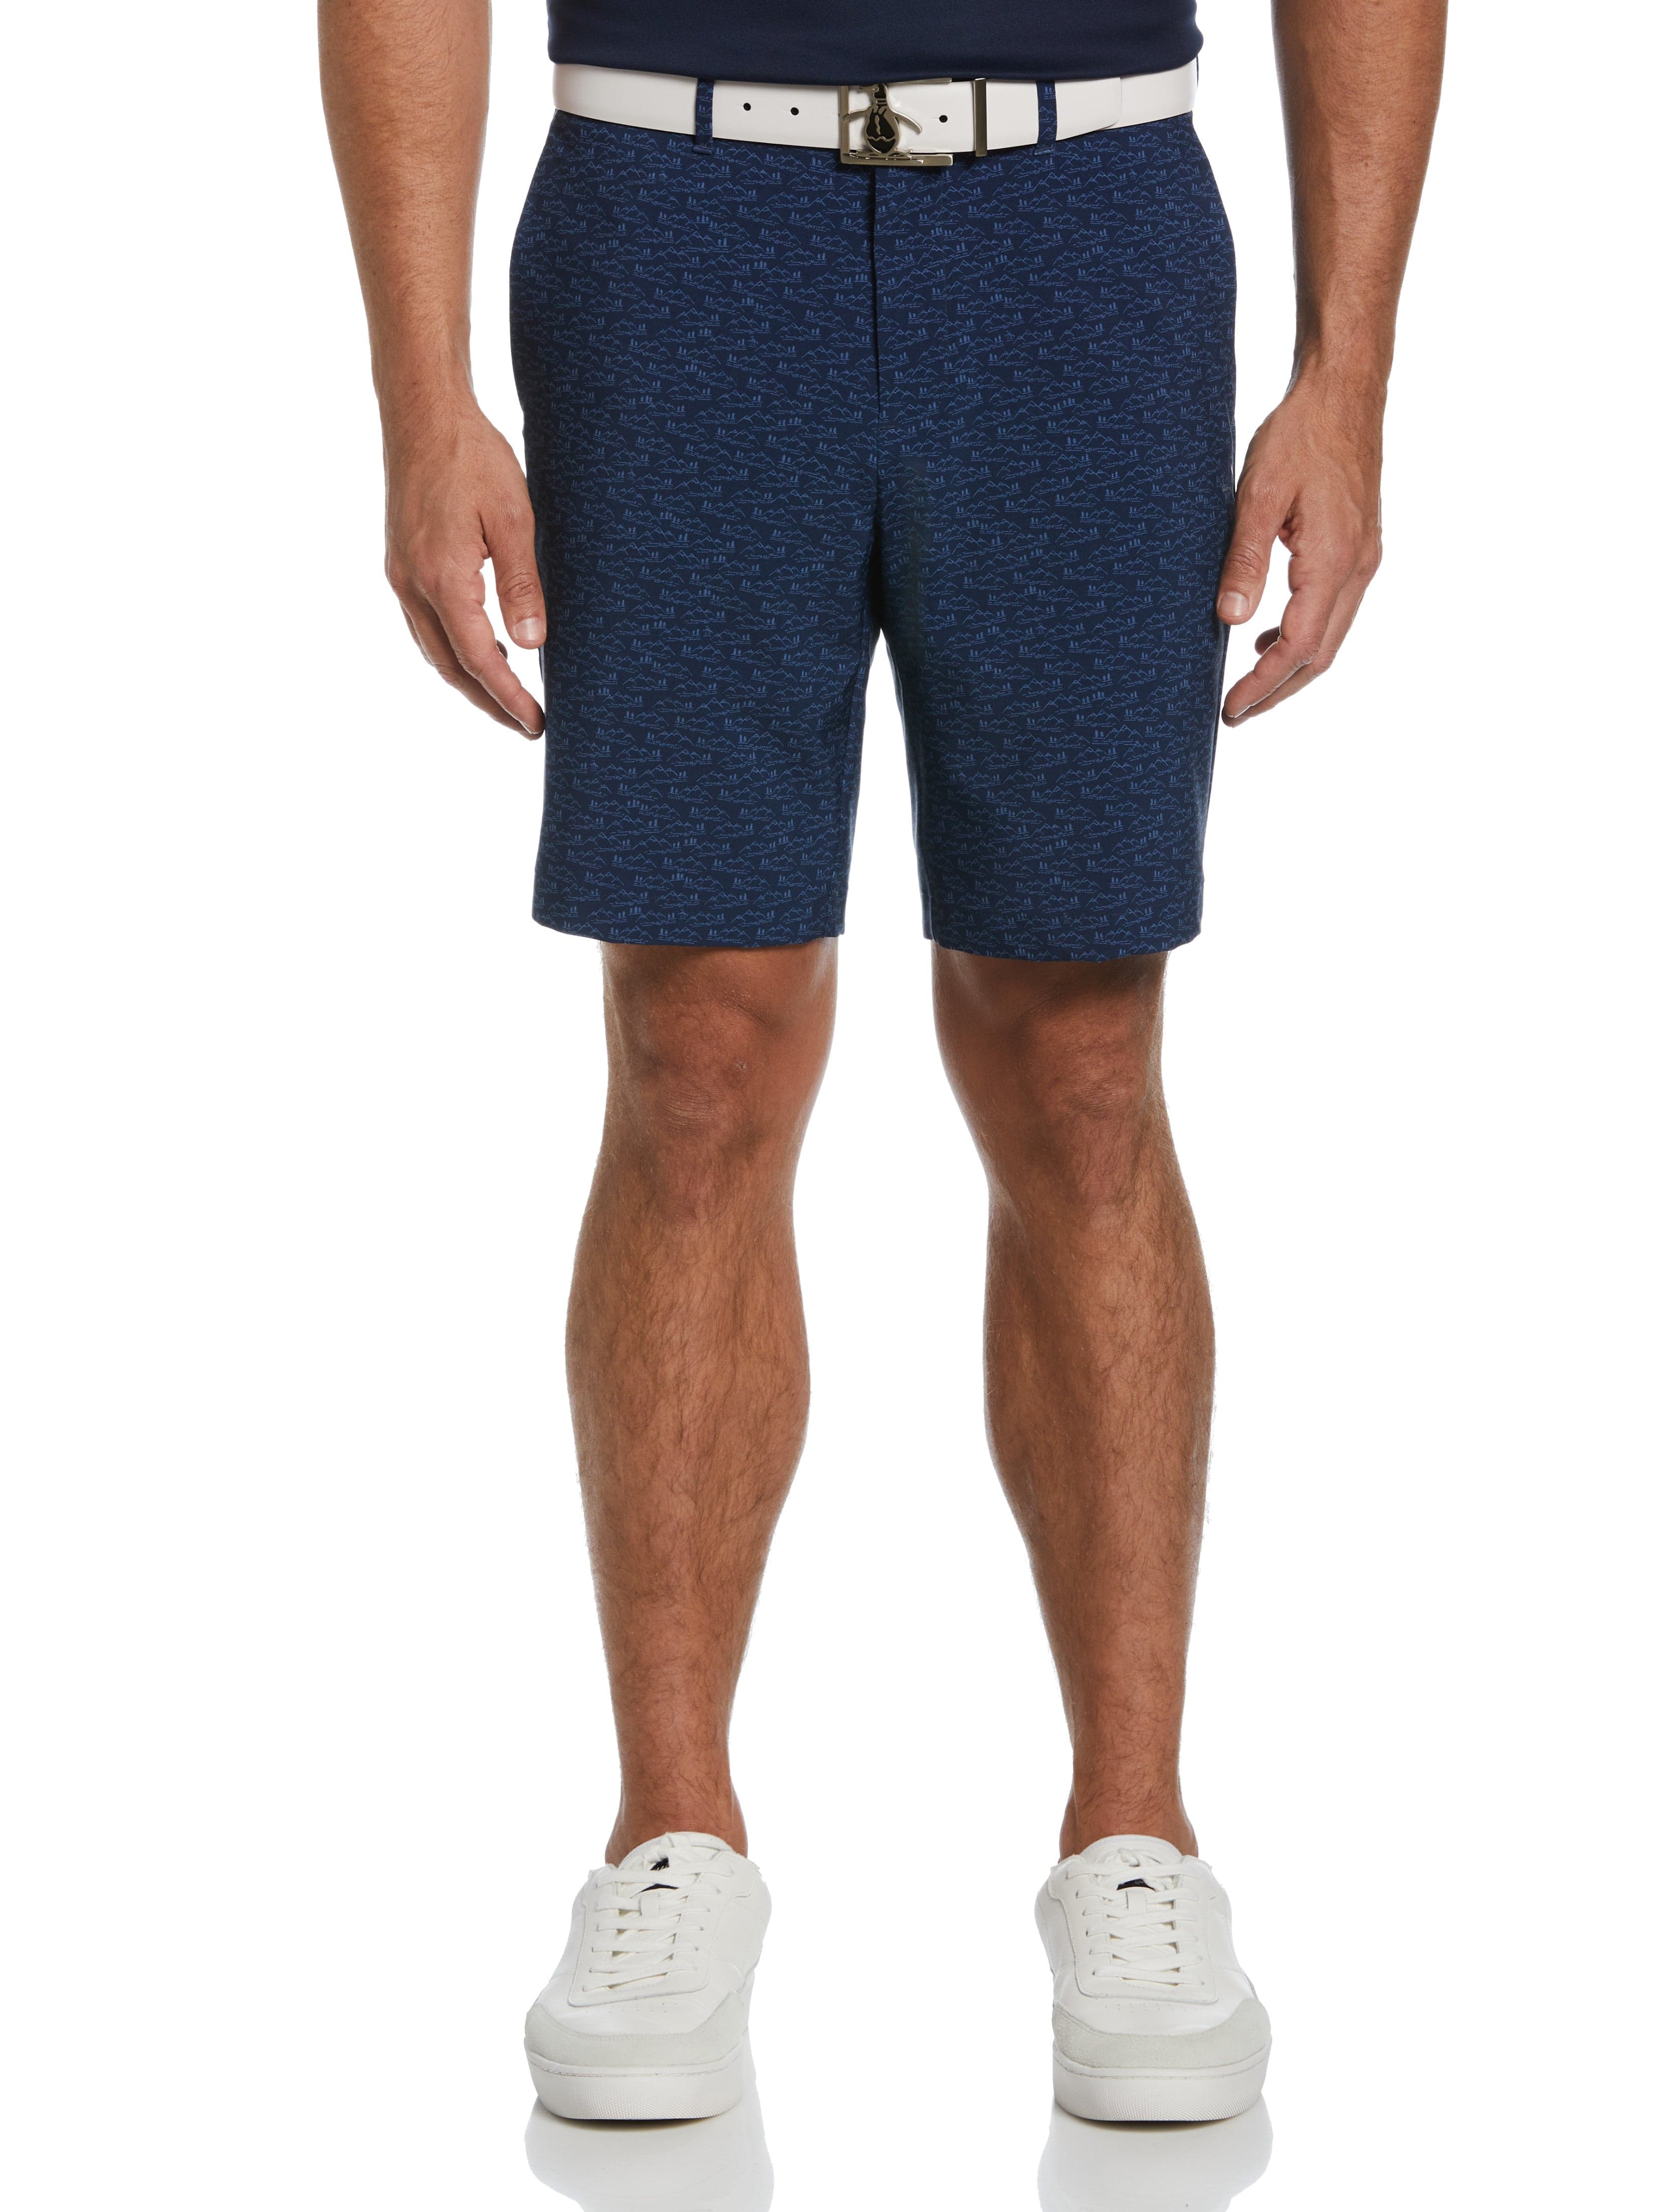 Original Penguin Mens Flat Front Hiking Print Golf Shorts, Size 29, Dark Navy Blue, Polyester/Elastane | Golf Apparel Shop